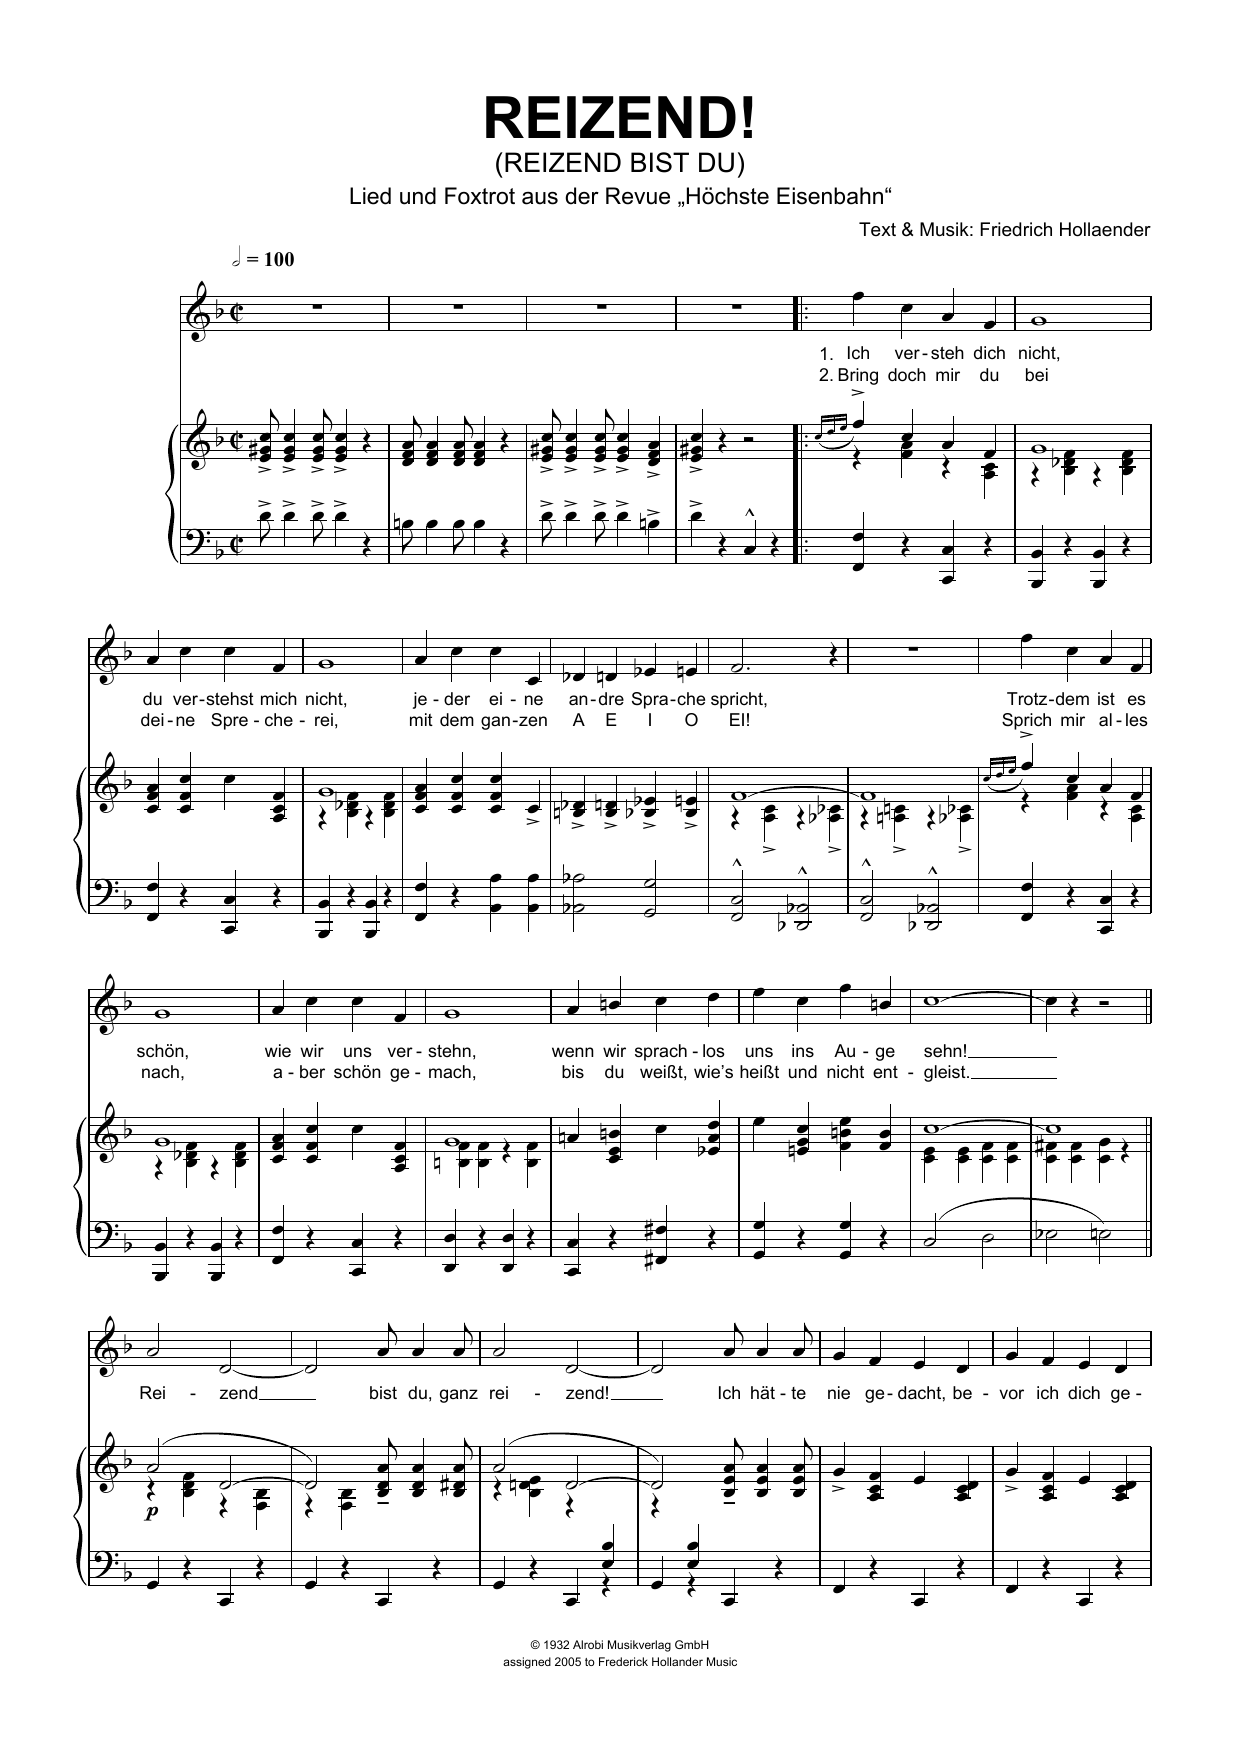 Friedrich Hollaender Reizend! (Reizend Bist Du) sheet music notes and chords arranged for Piano & Vocal